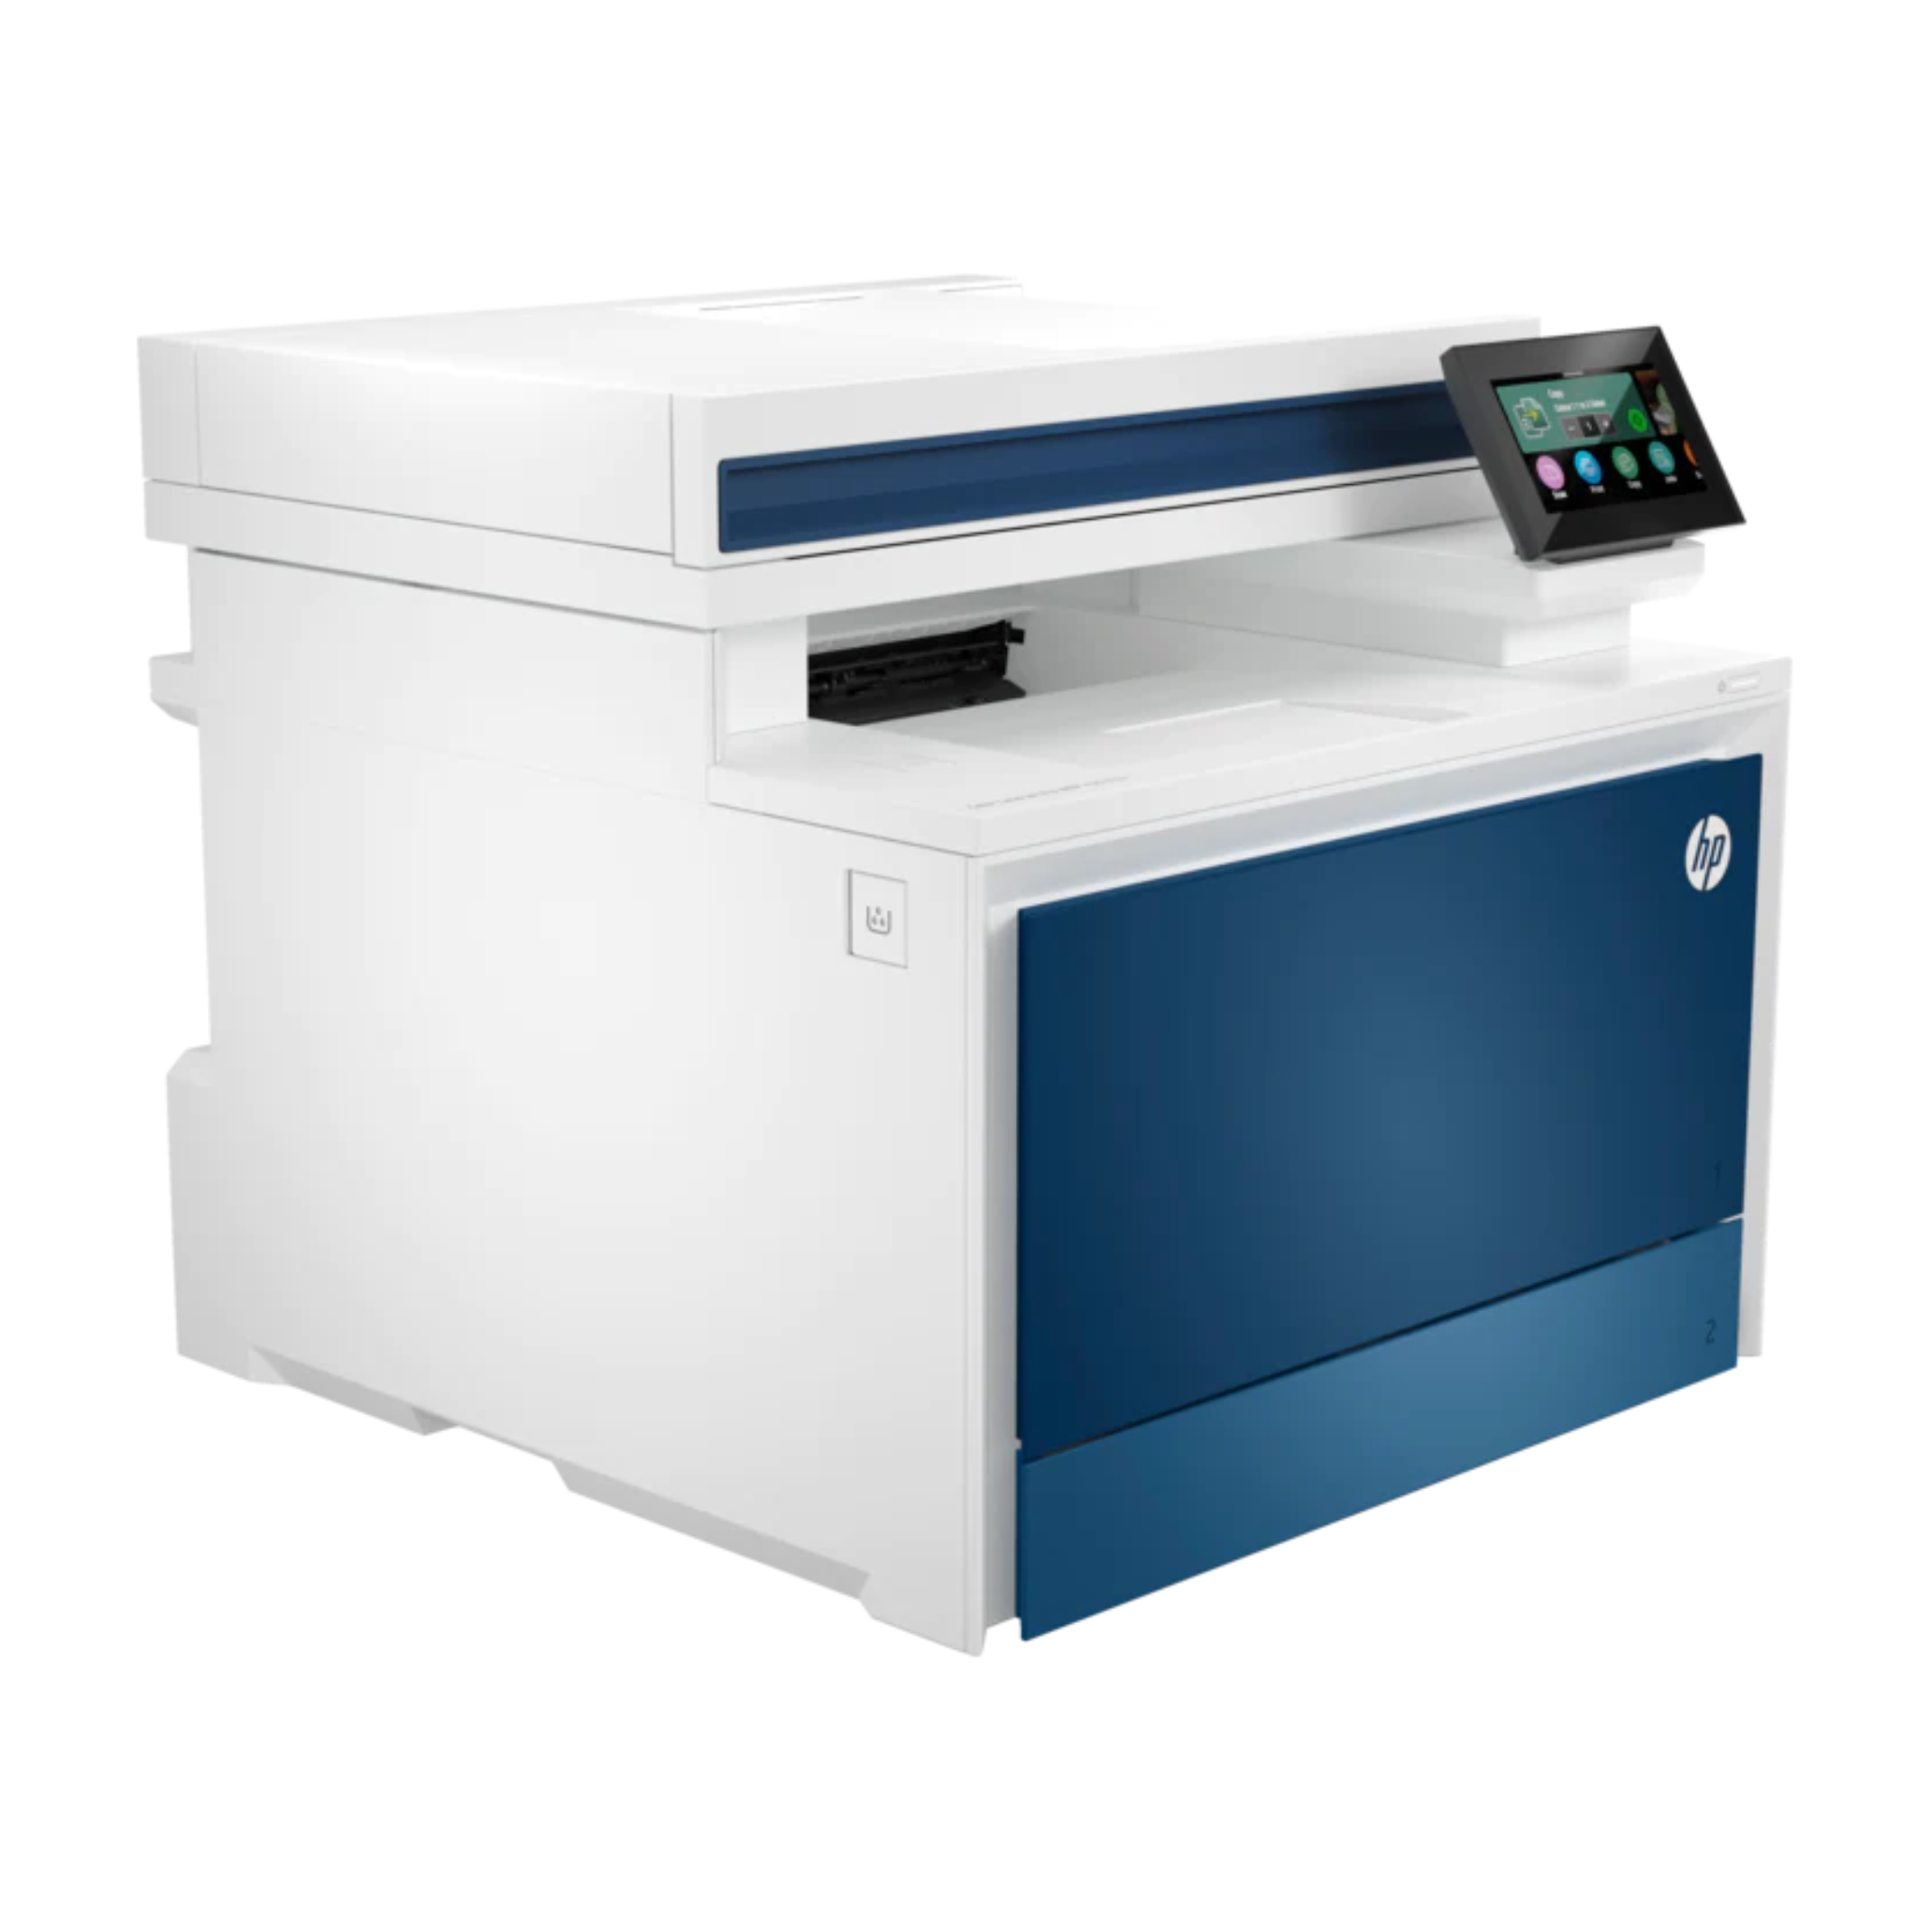 HP Laserjet Pro - Impresora multifuncional